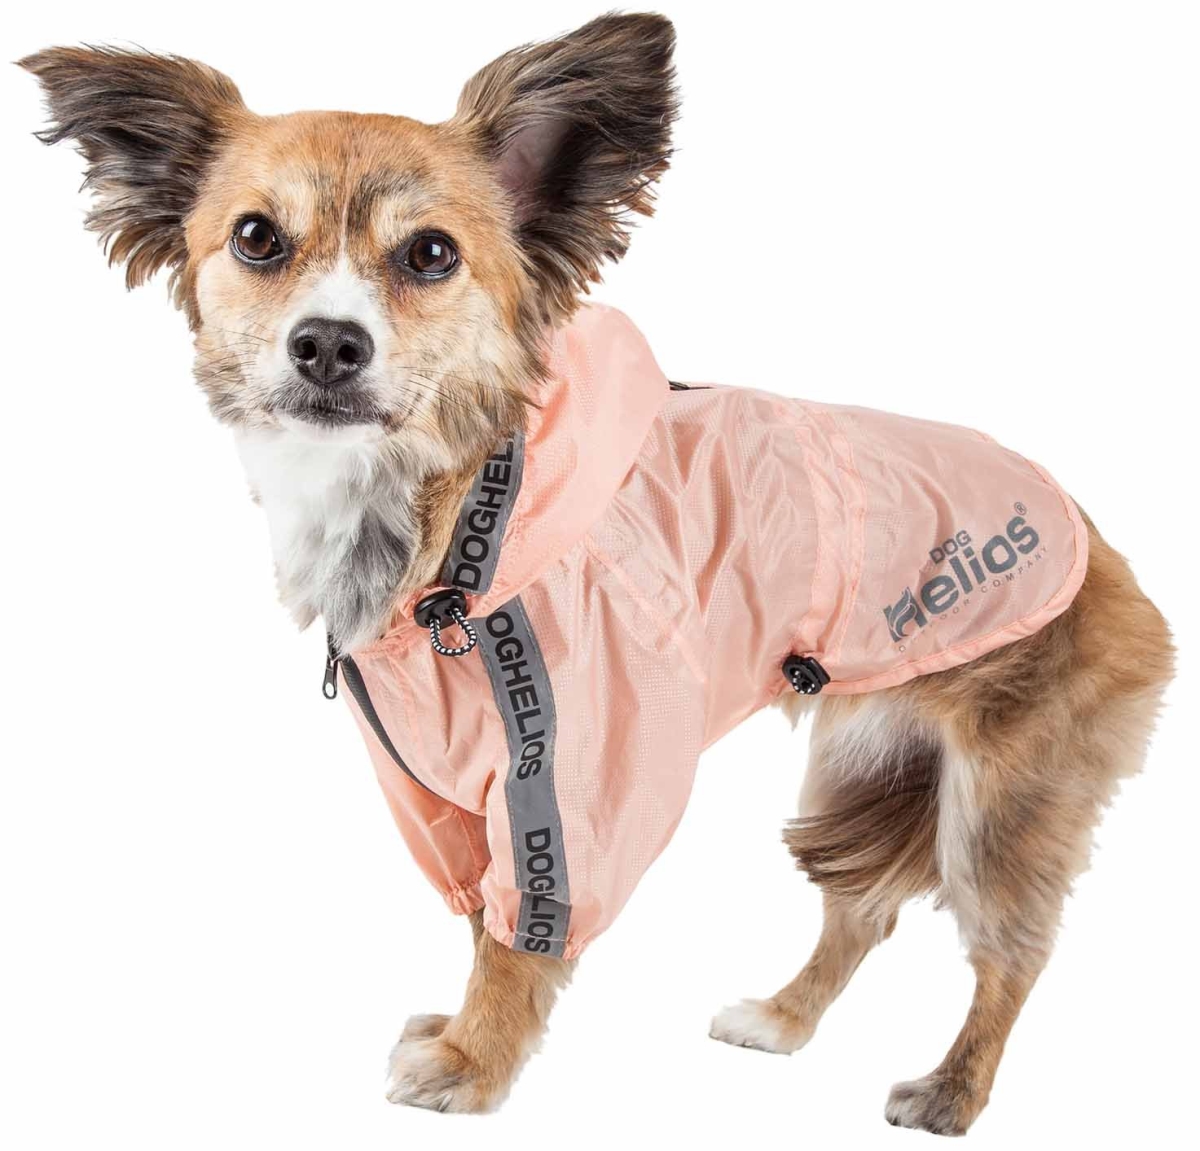 R9pcxs Torrential Shield Waterproof Multi-adjustable Pet Dog Windbreaker Raincoat - Peach, Extra Small